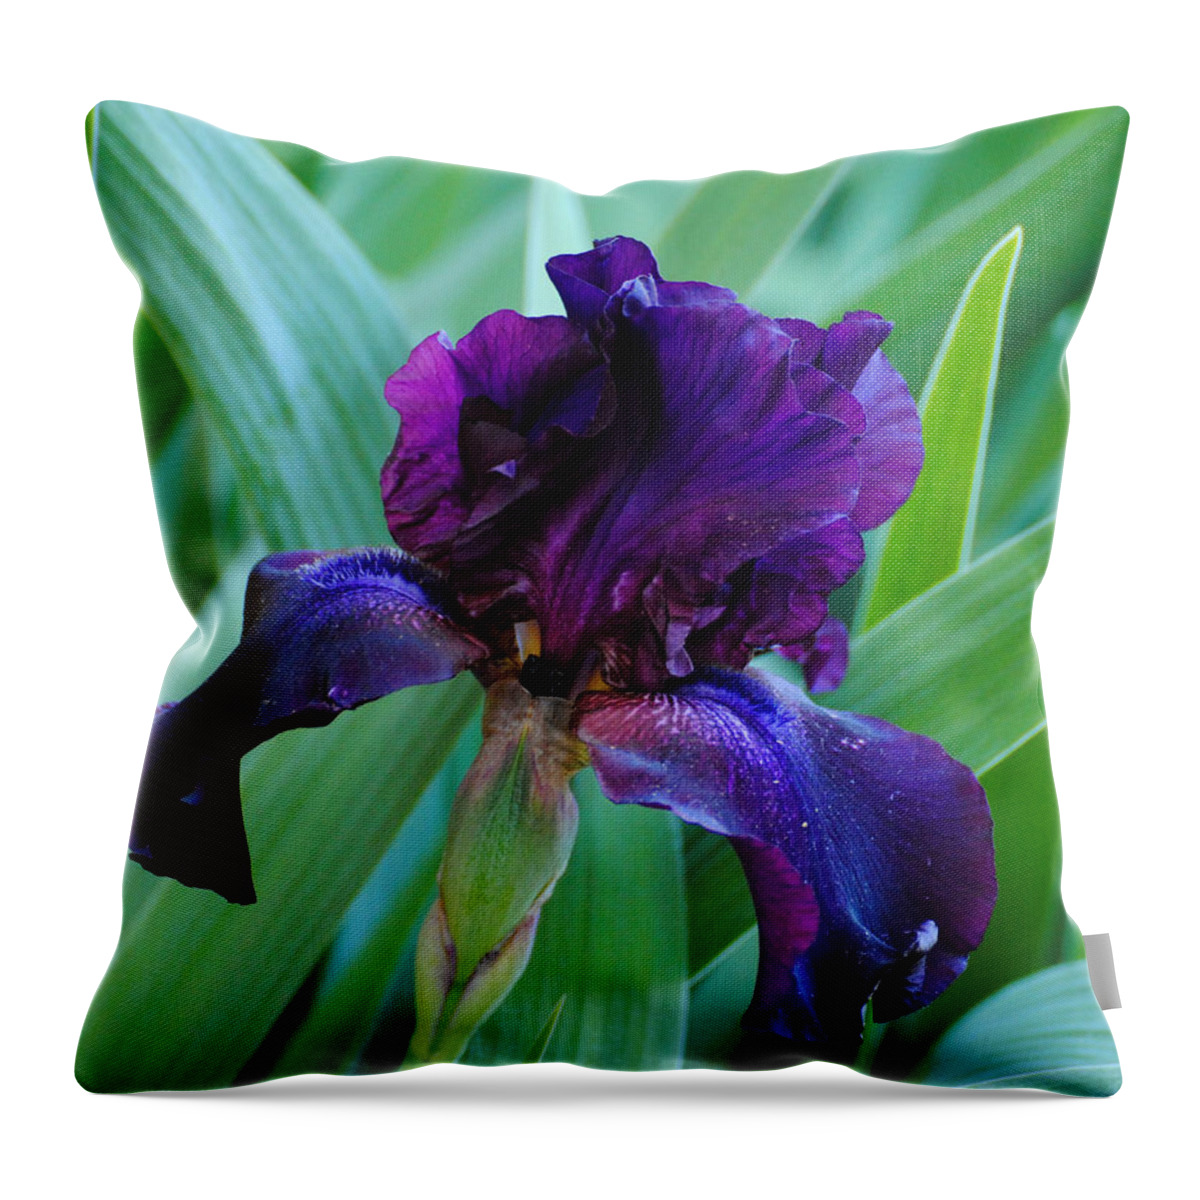 Beautiful Throw Pillow featuring the photograph Dark Purple Iris by Jai Johnson